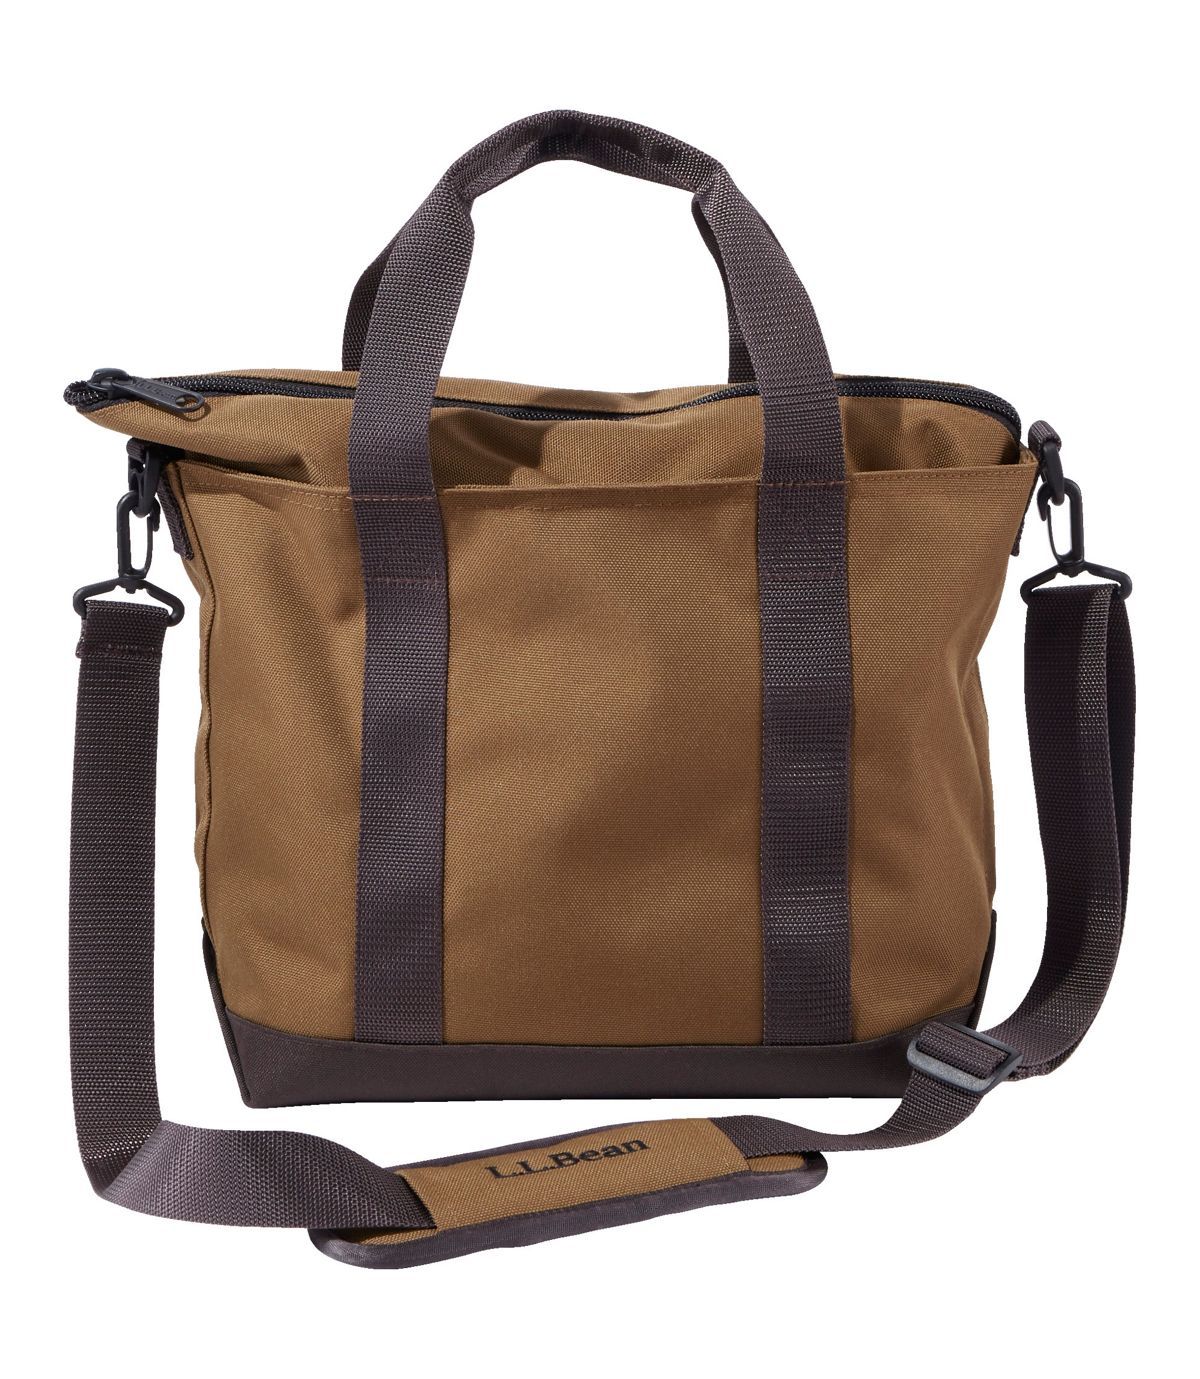 Hunter's Tote Bag, Zip-Top with Shoulder Strap | L.L. Bean